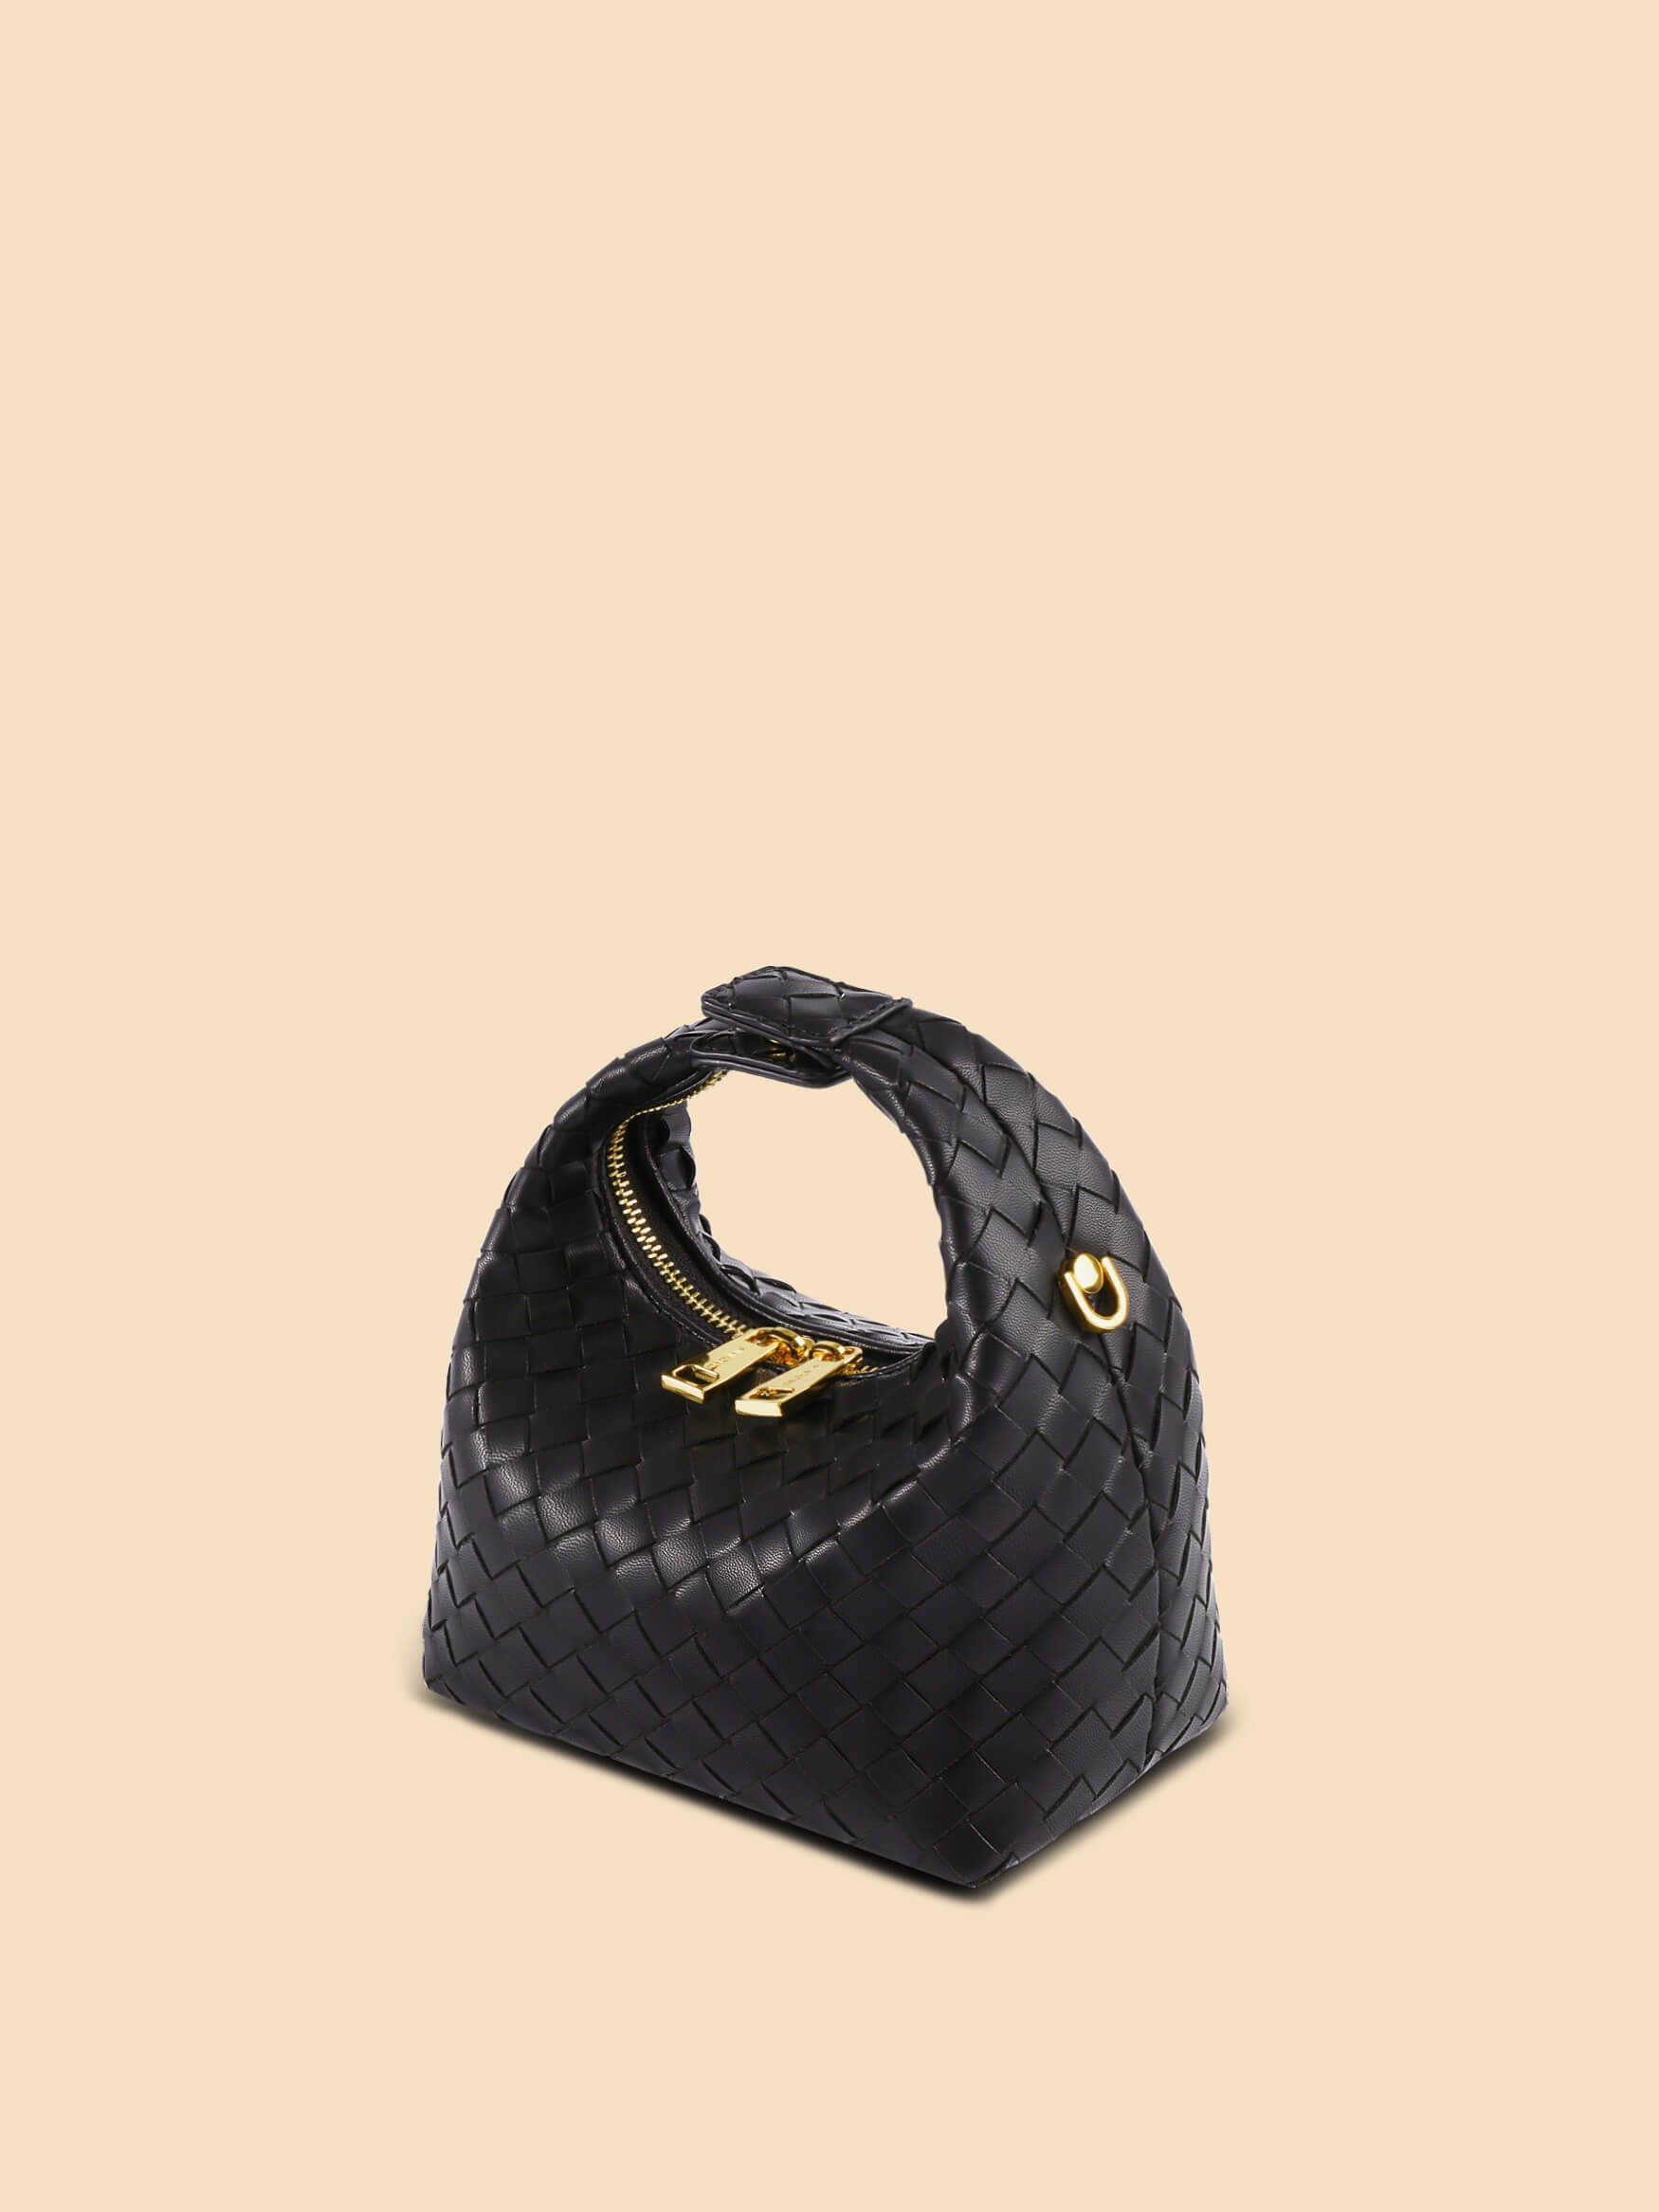 SINBONO Vienna Black Braided Leather Handbags -Vegan Leather Women Bag